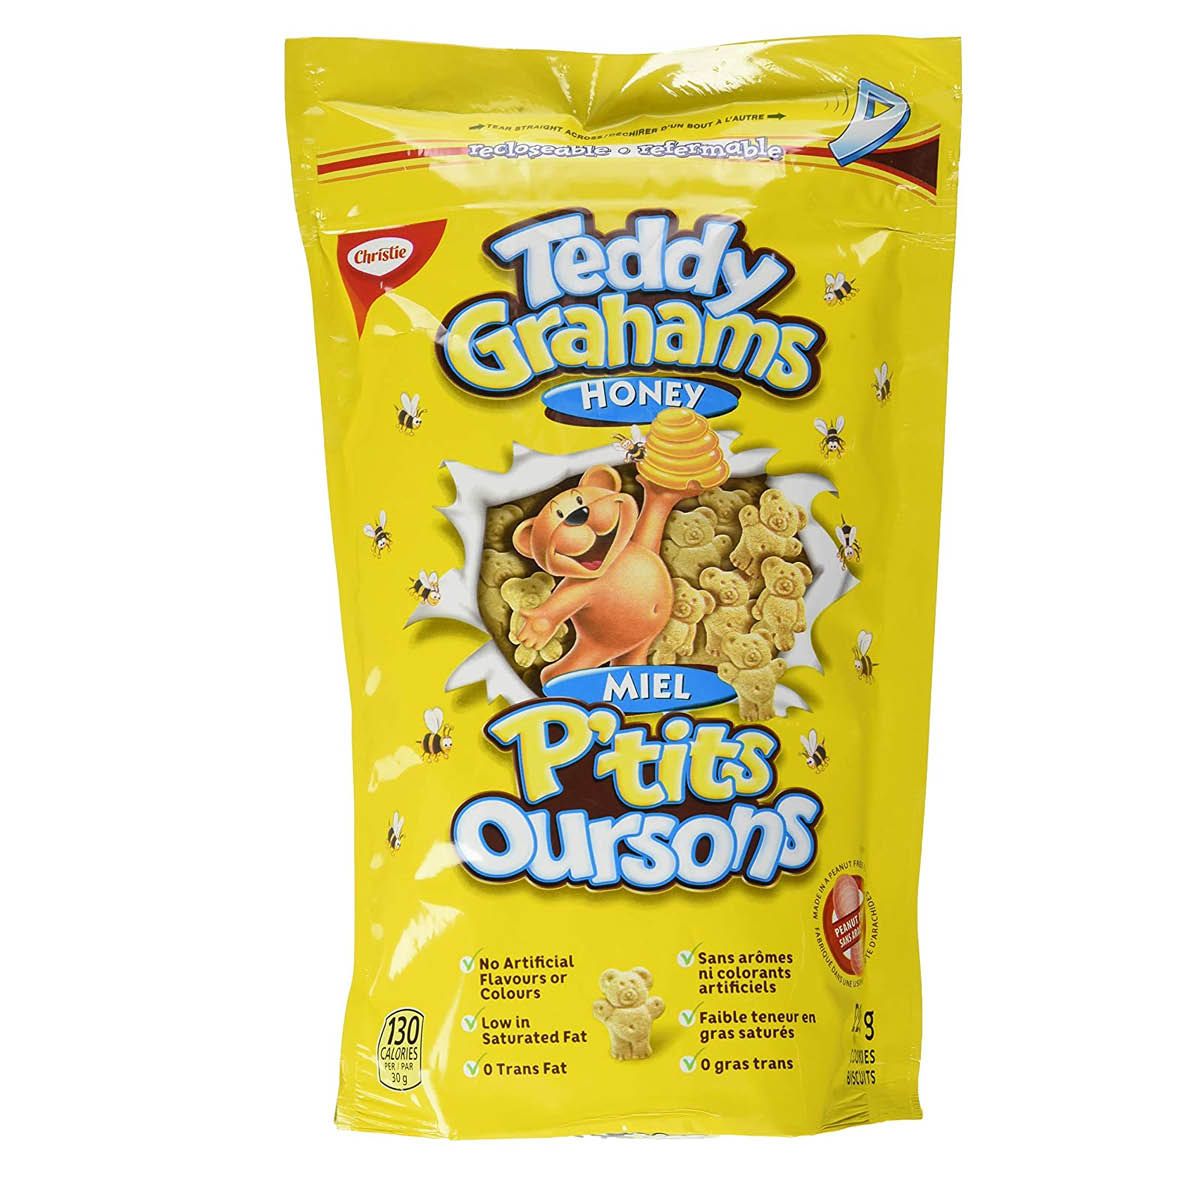 Christie Cookies Teddy Grahams Honey, 225g